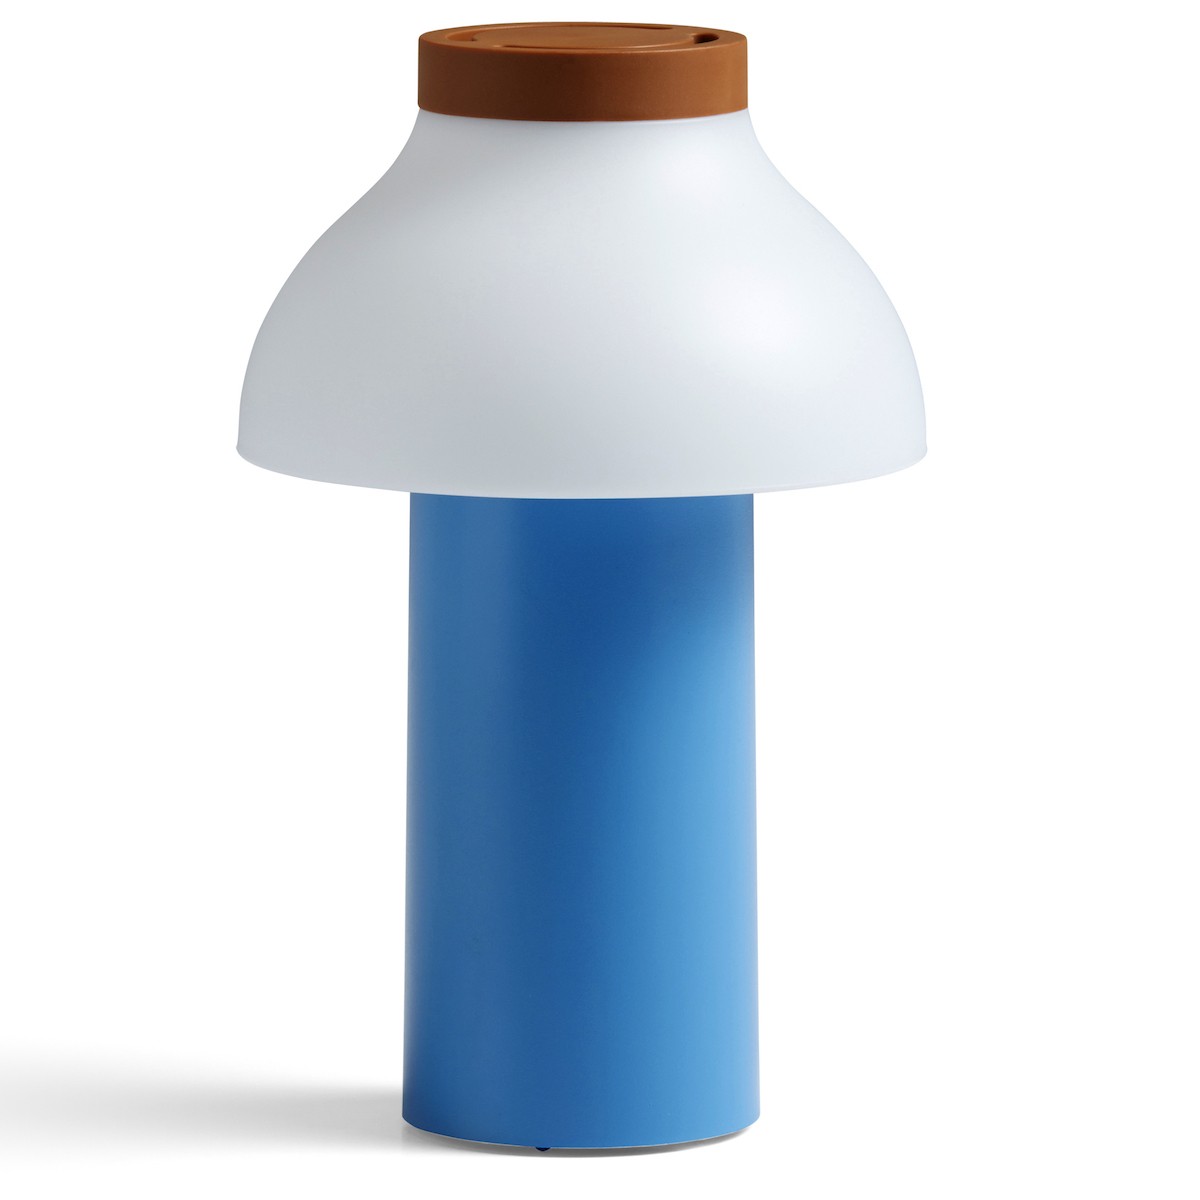 sky blue - PC portable lamp